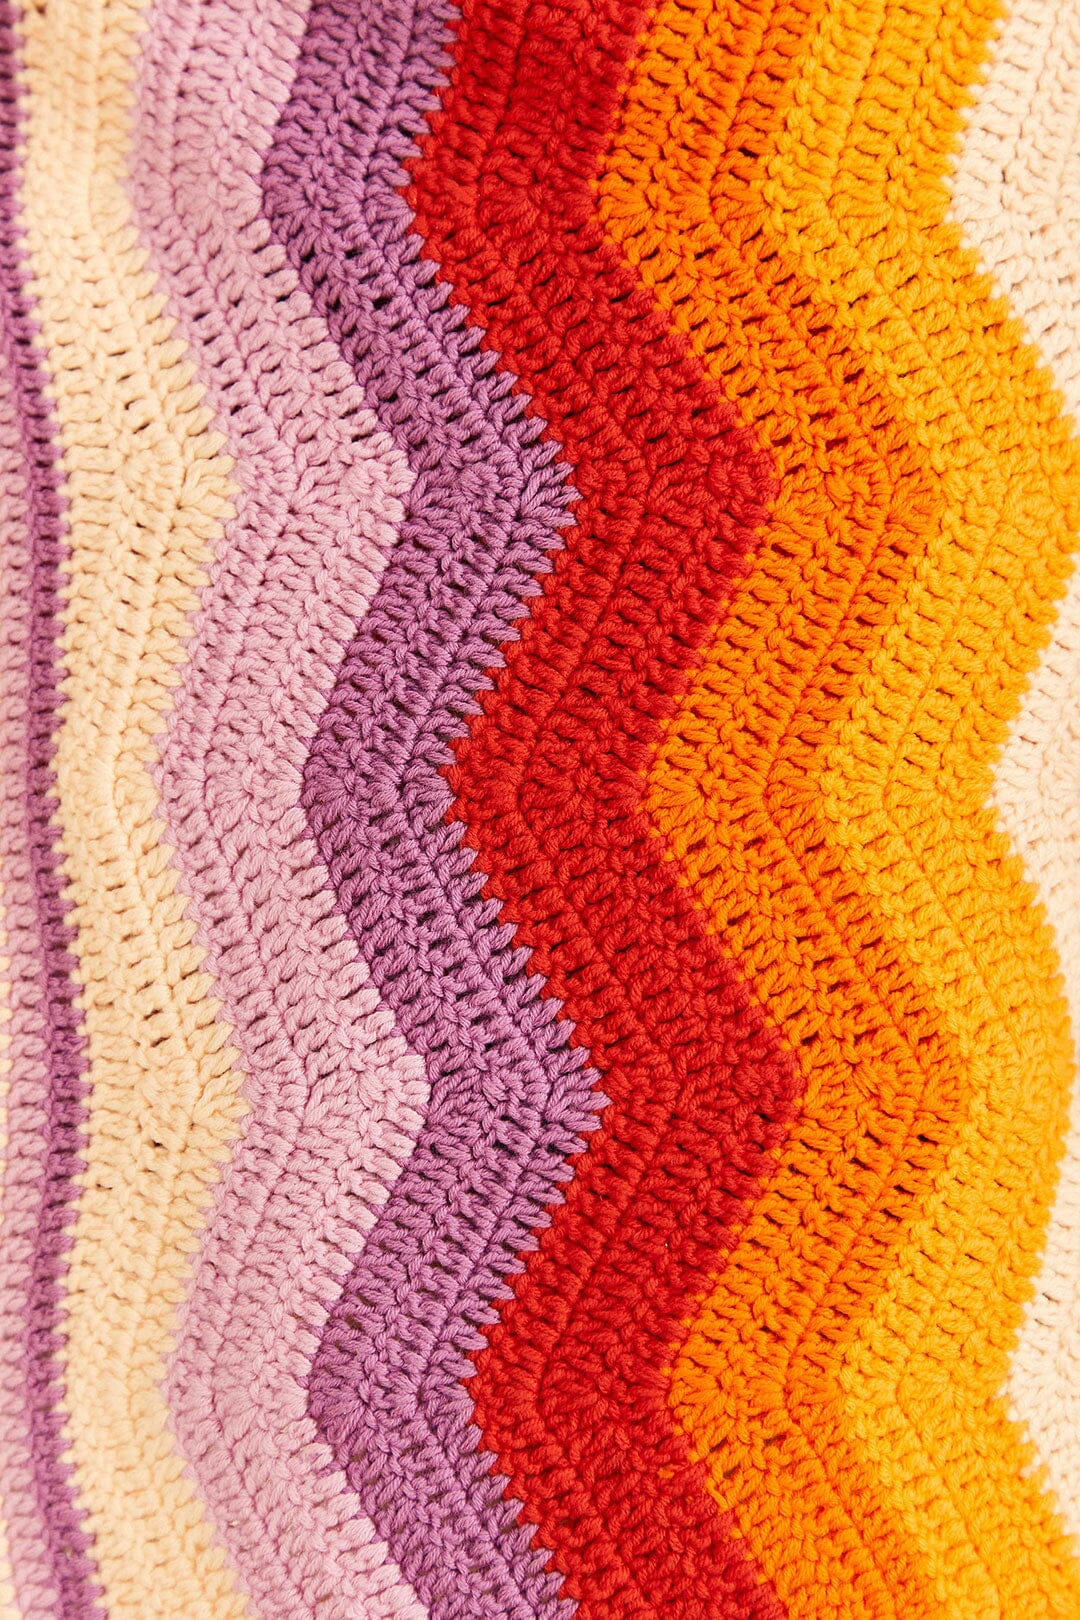 Multi Stripes Crochet Wrap Mini Skirt